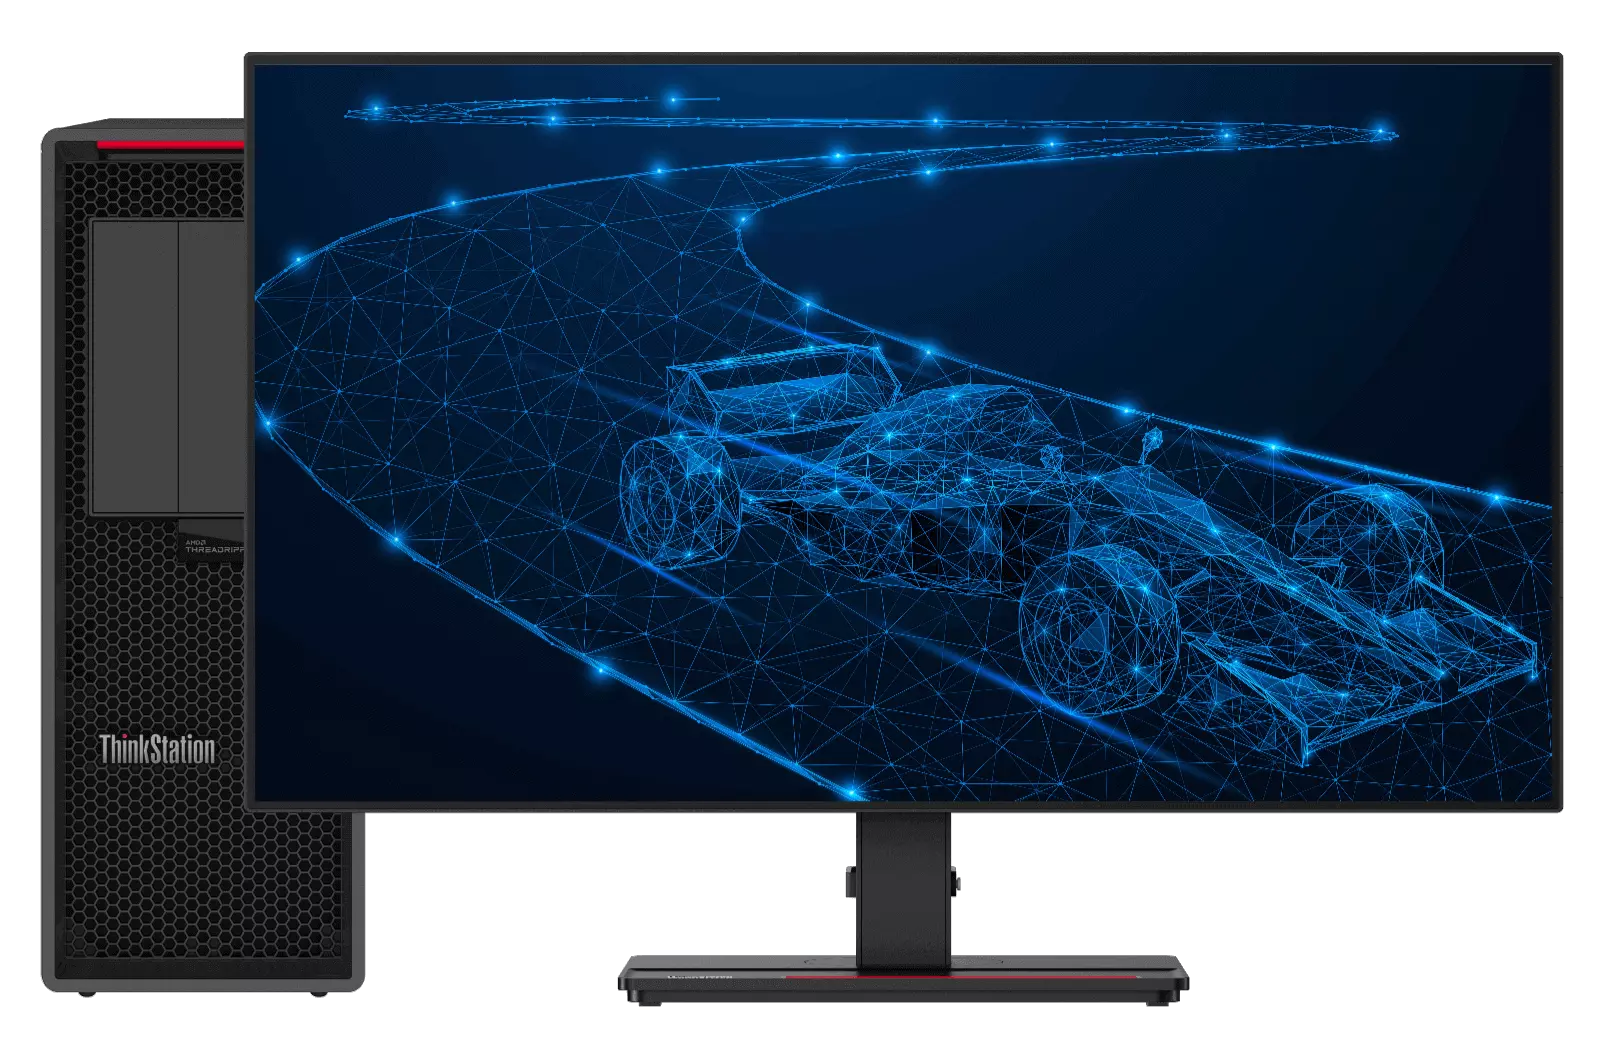 Lenovo ThinkStation sa nacrtom F1 vozila na trkačkoj stazi prikazano na ekranu.